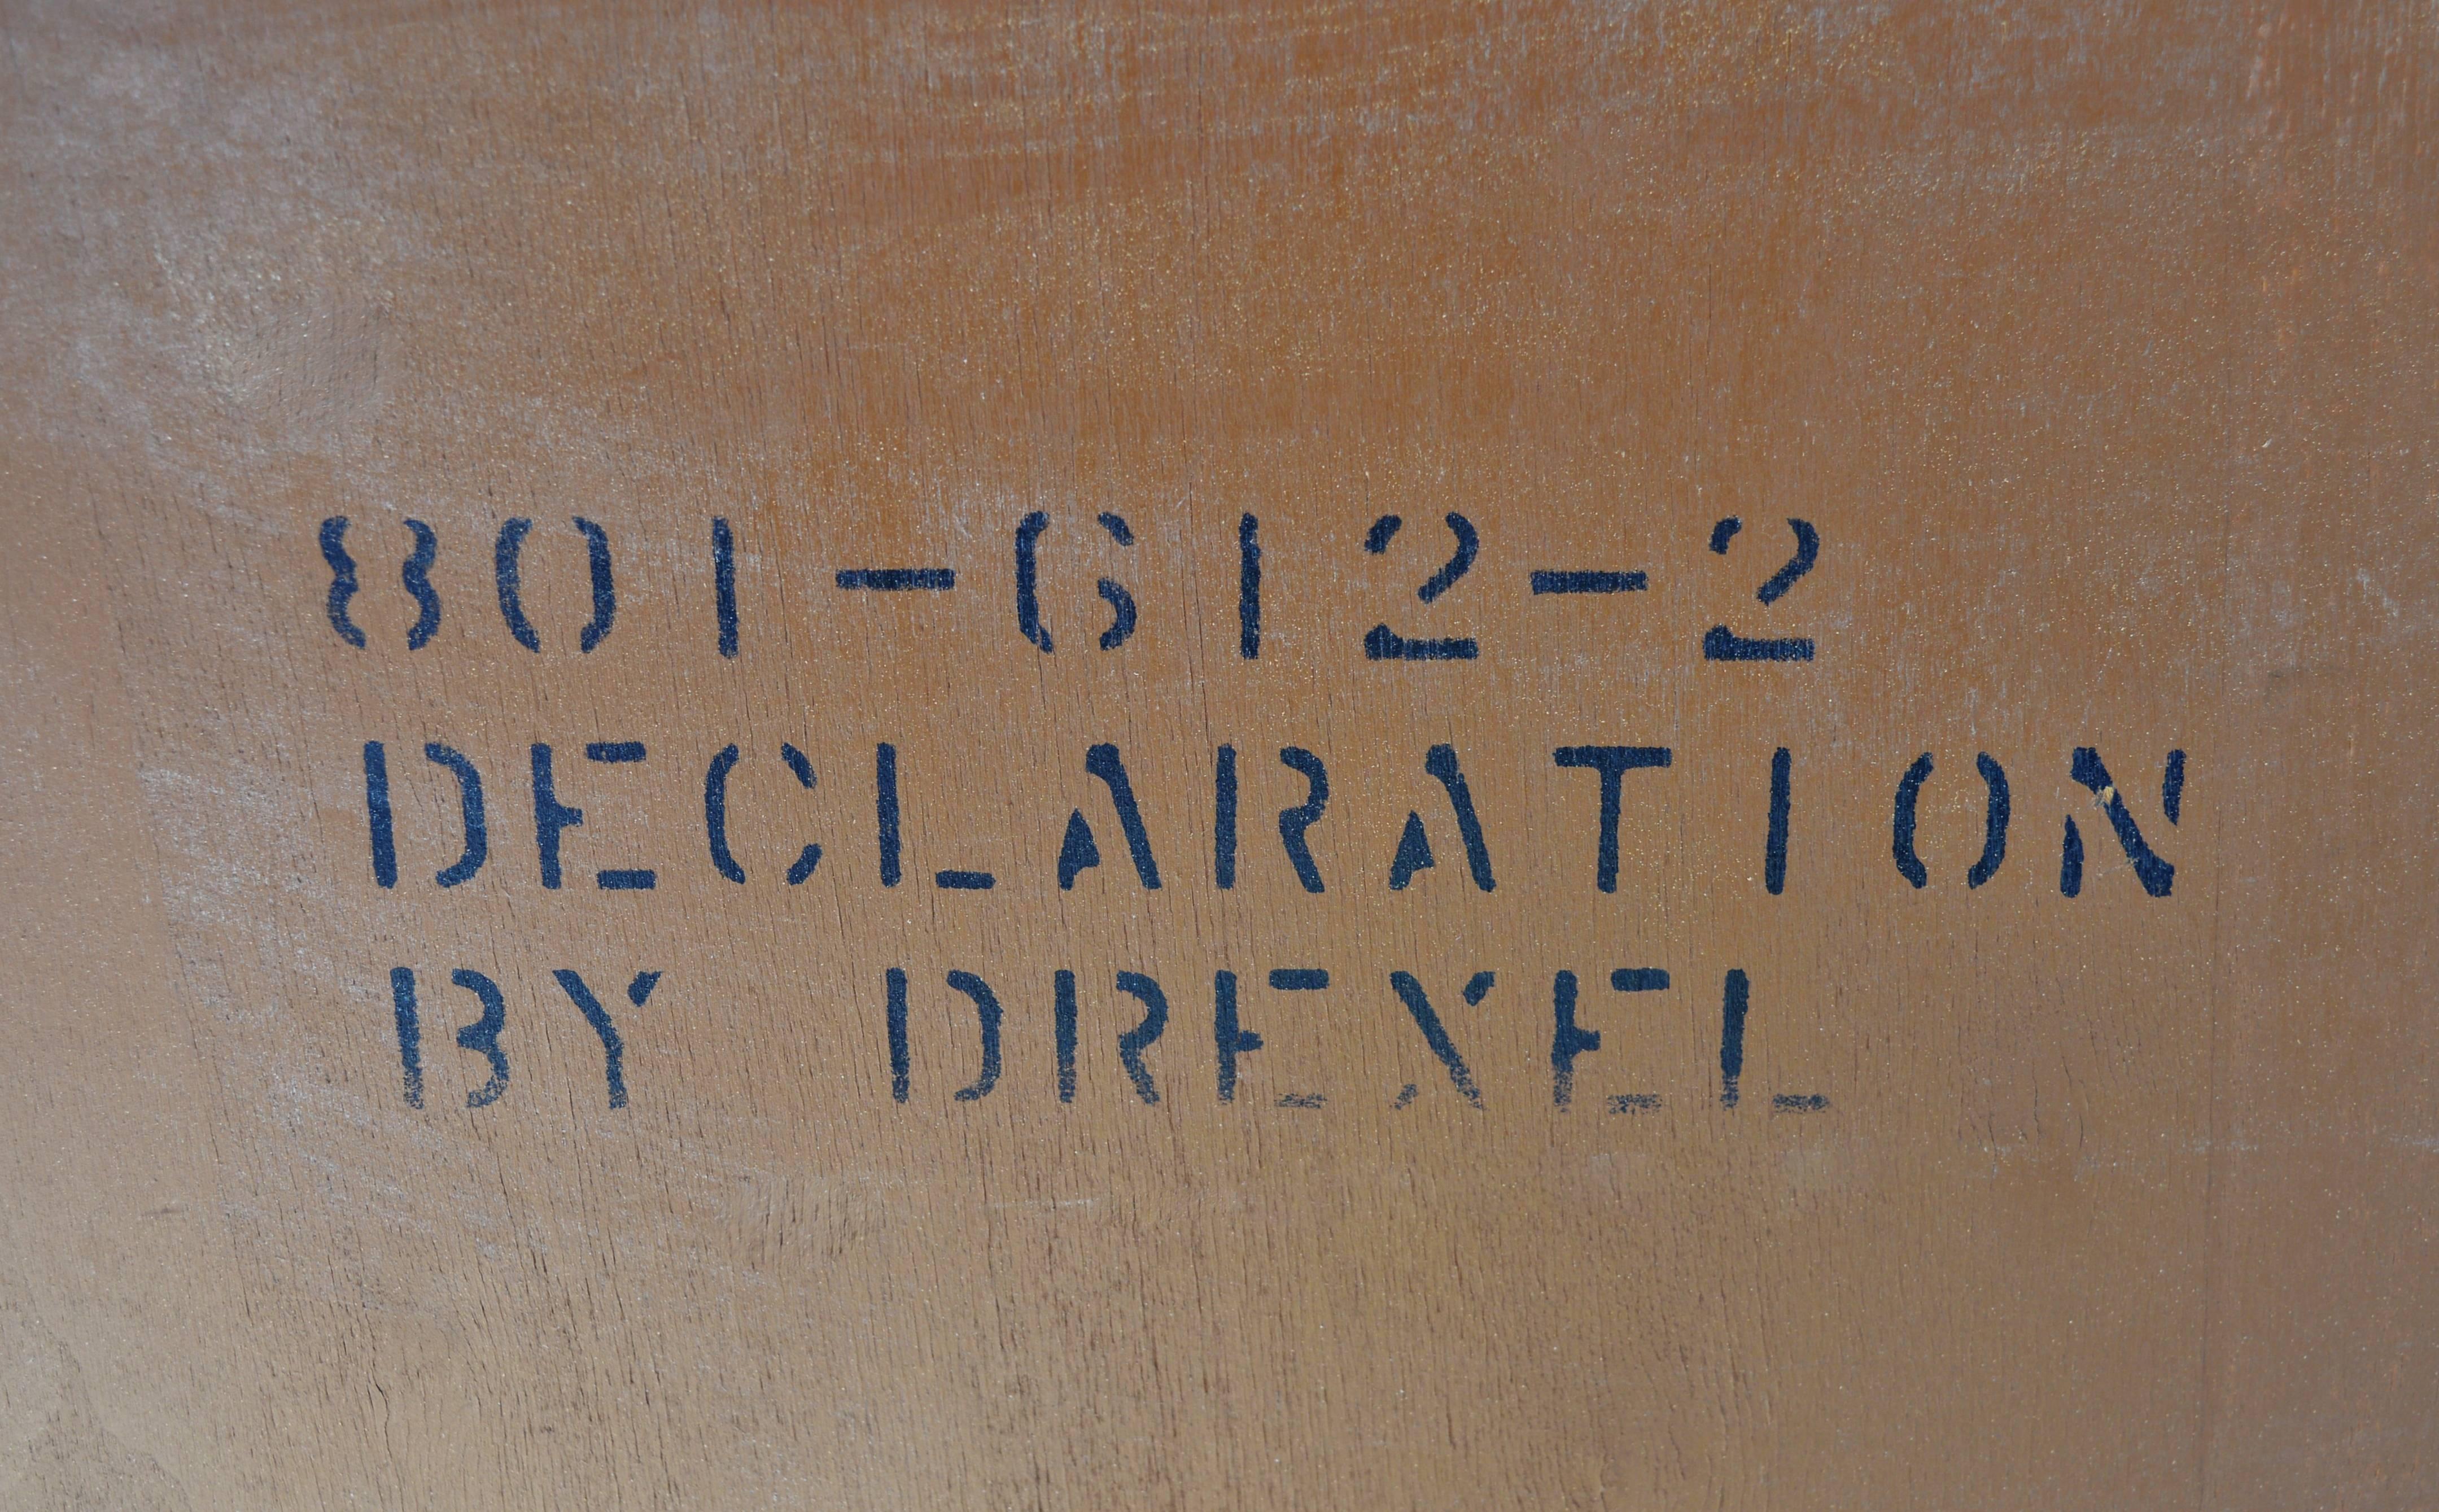 Pair of Kipp Stewart Bedside Tables, Drexel Declaration 2